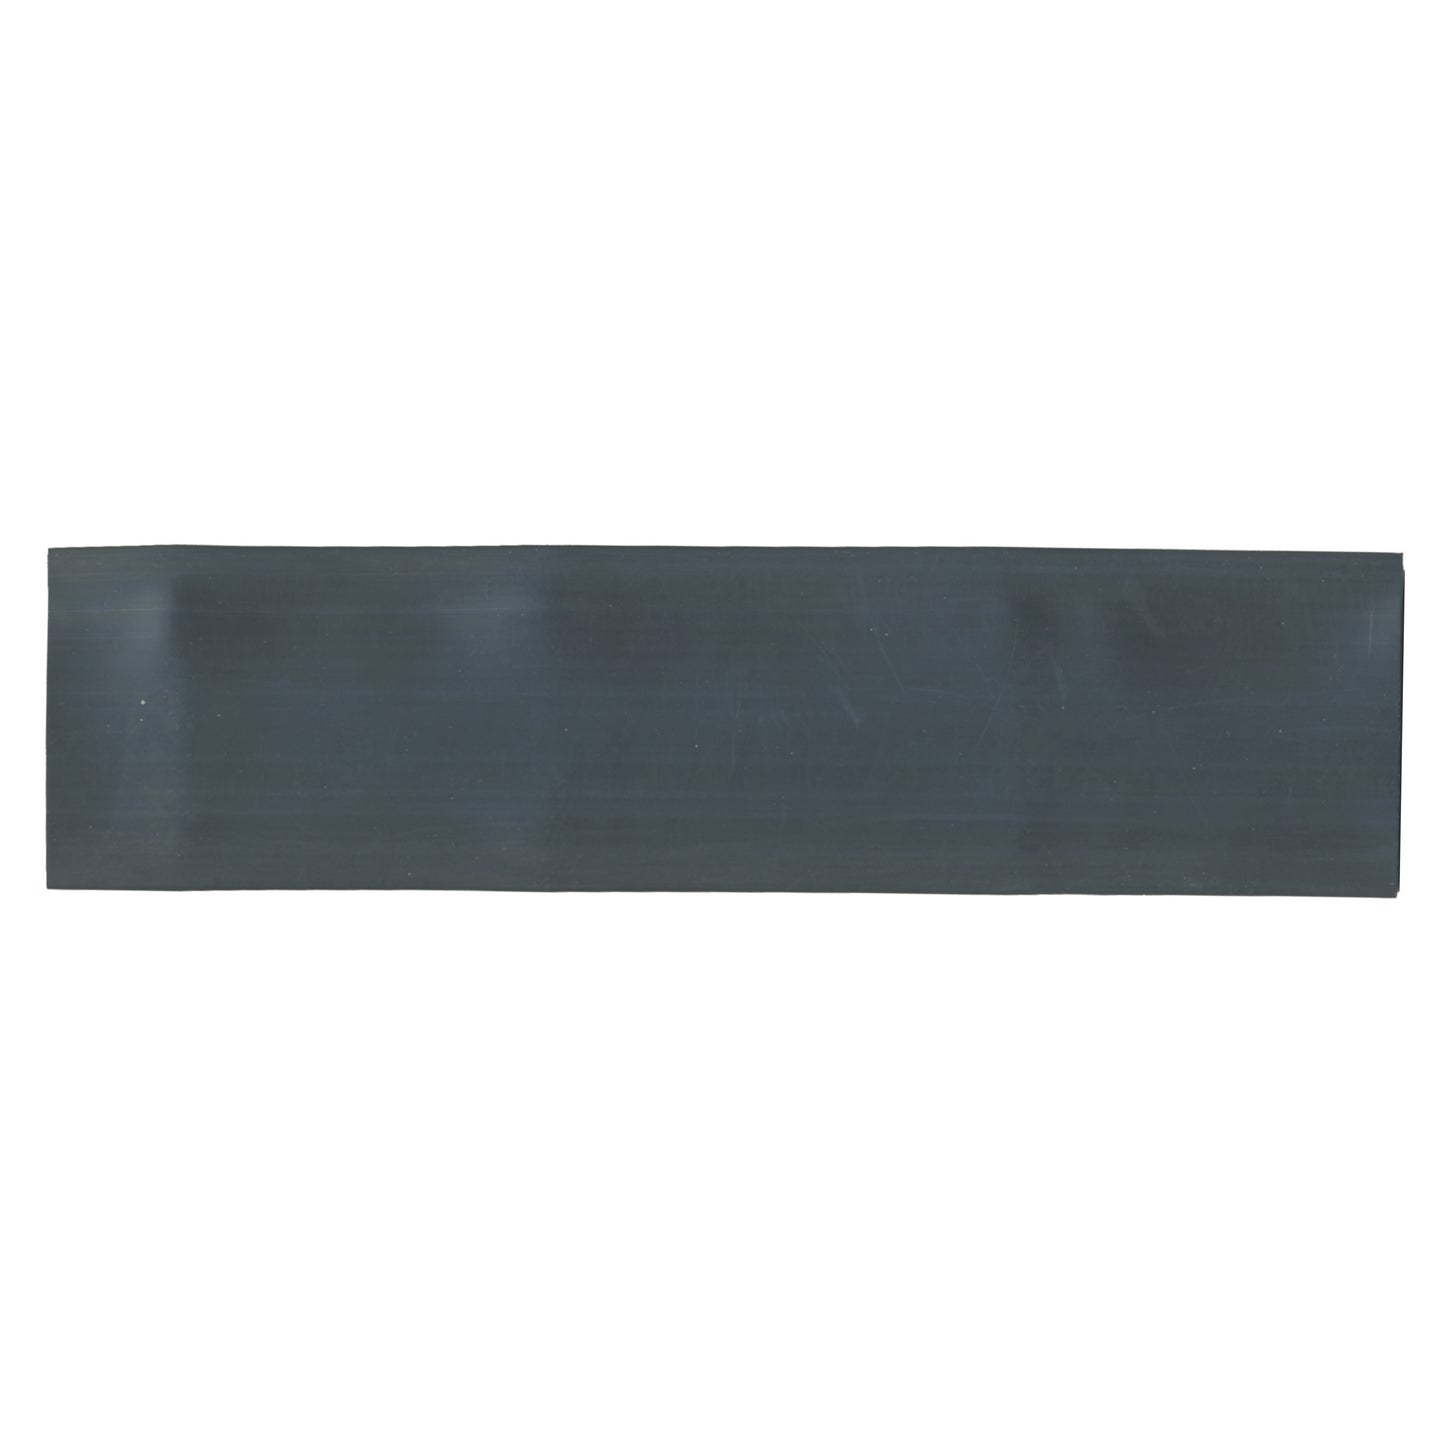 Flexible Thin Single Wall Non-Adhesive Heat Shrink Tubing 2:1 Black 1" ID - 50' Ft Spool